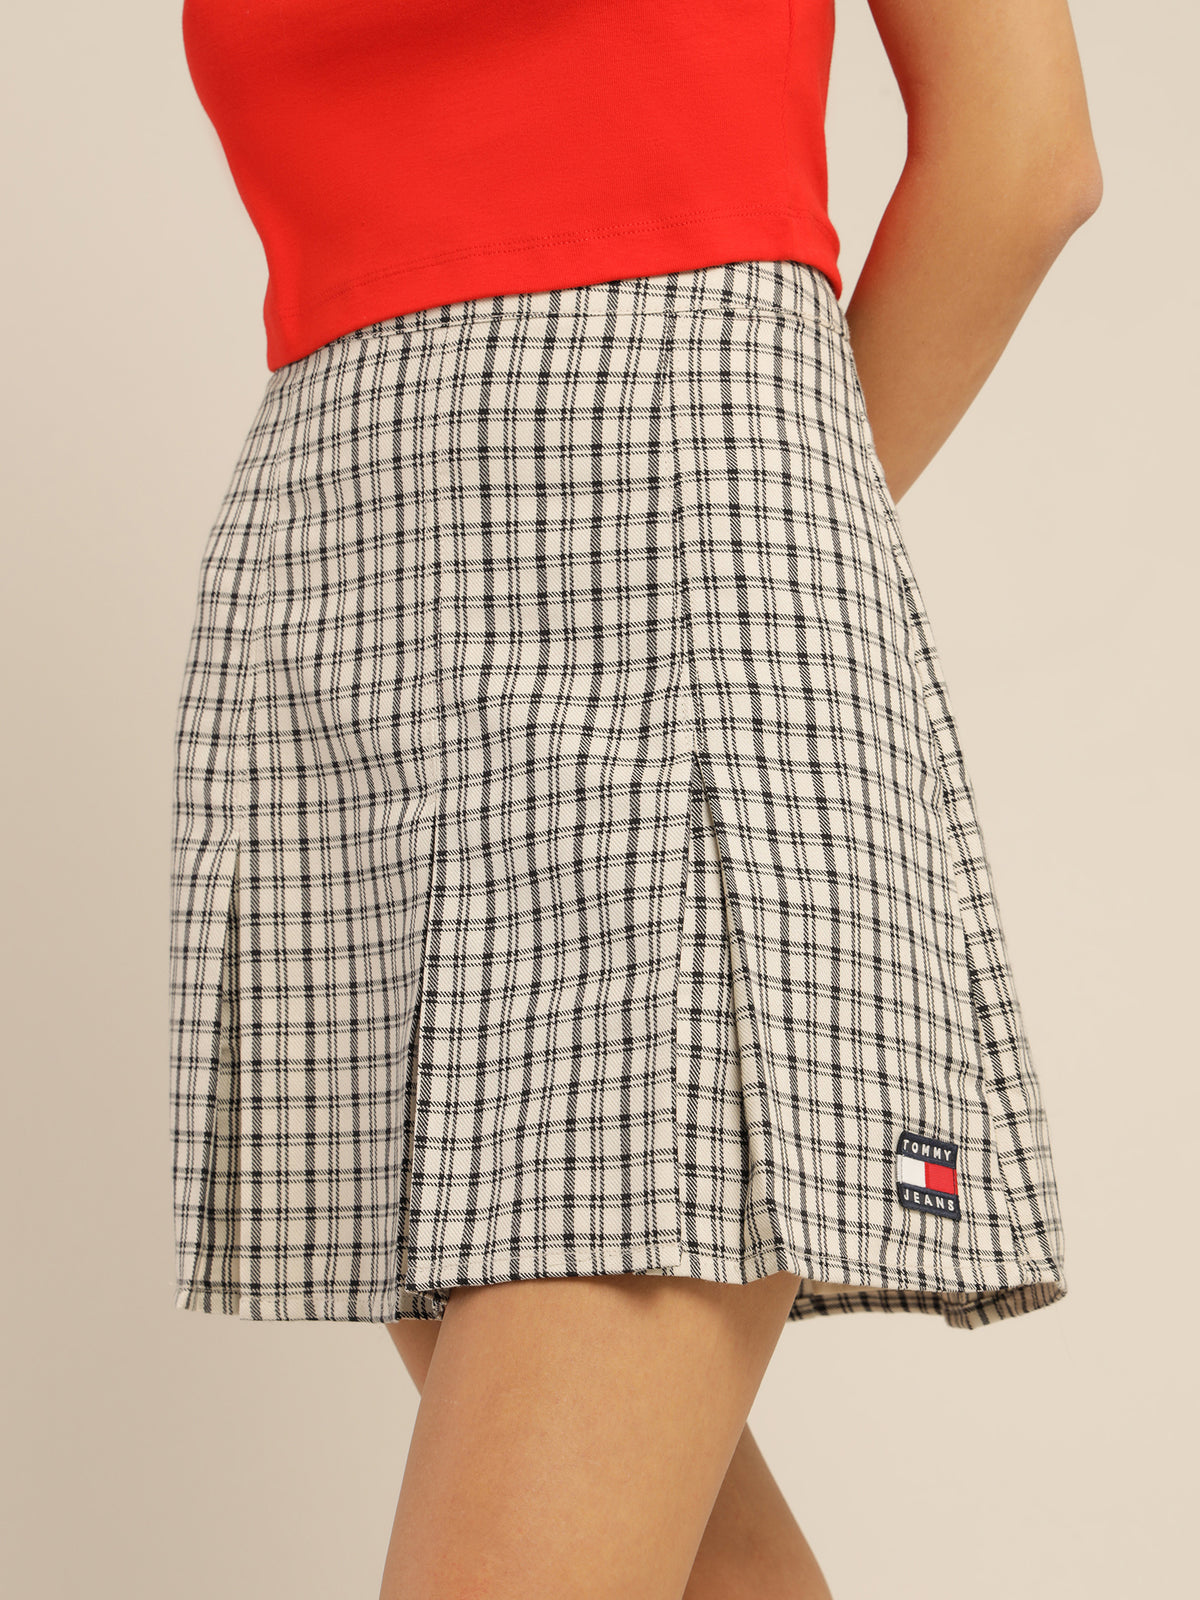 Varsity Mini Skirt in Two Tone Plaid